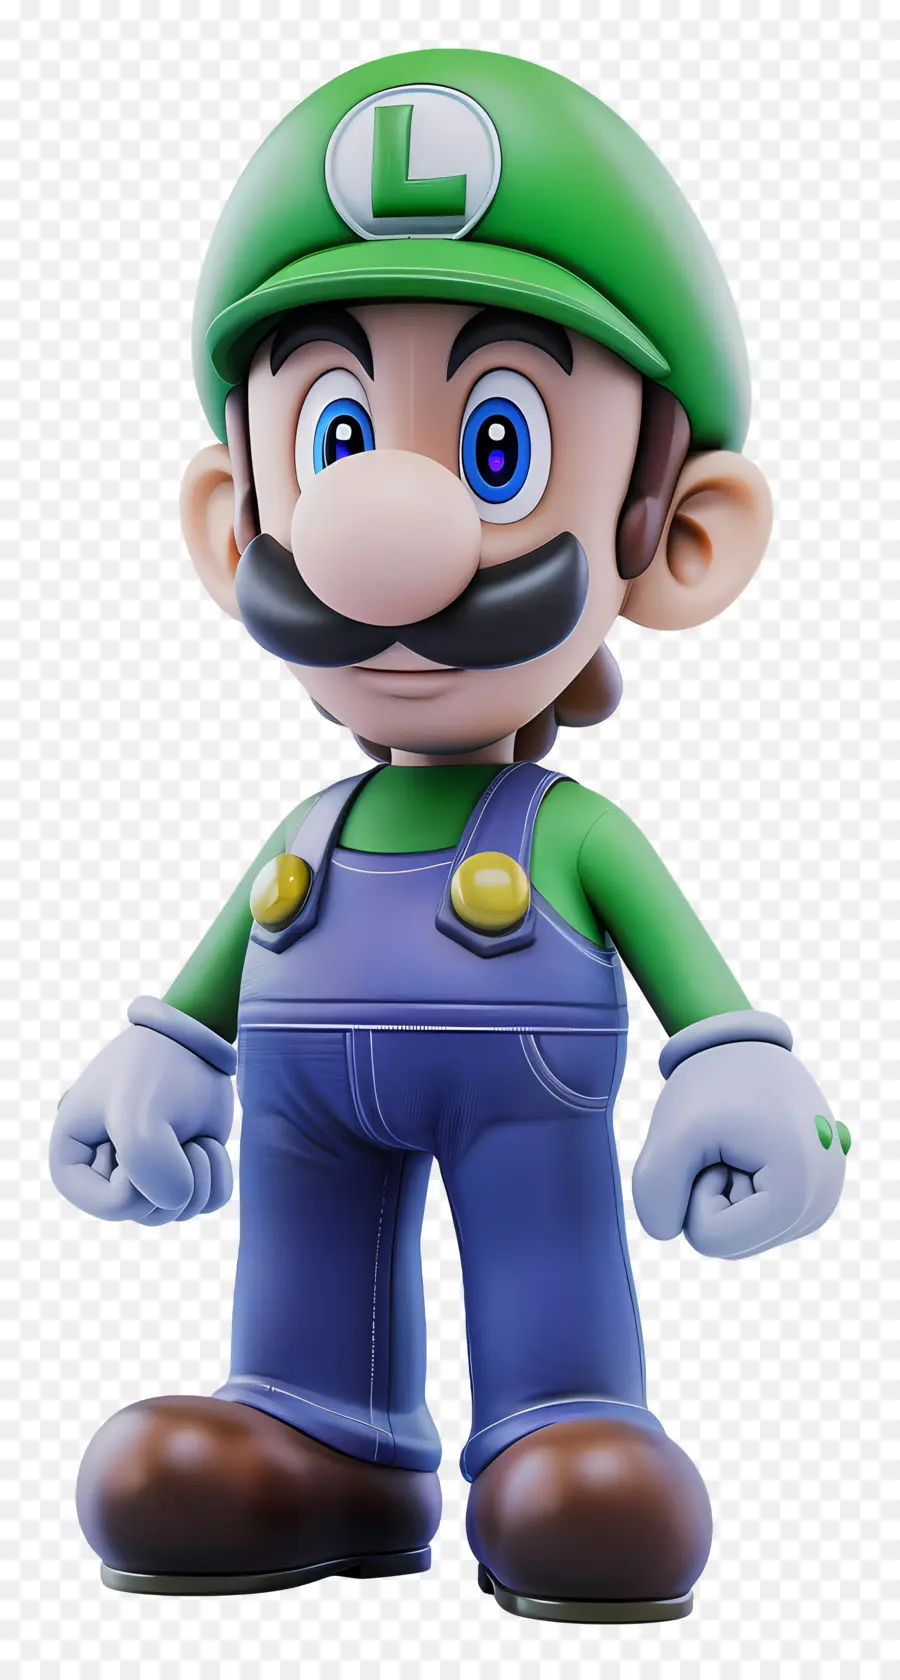 Luigi - Fröhlicher Charakter in grünen Overalls lächeln